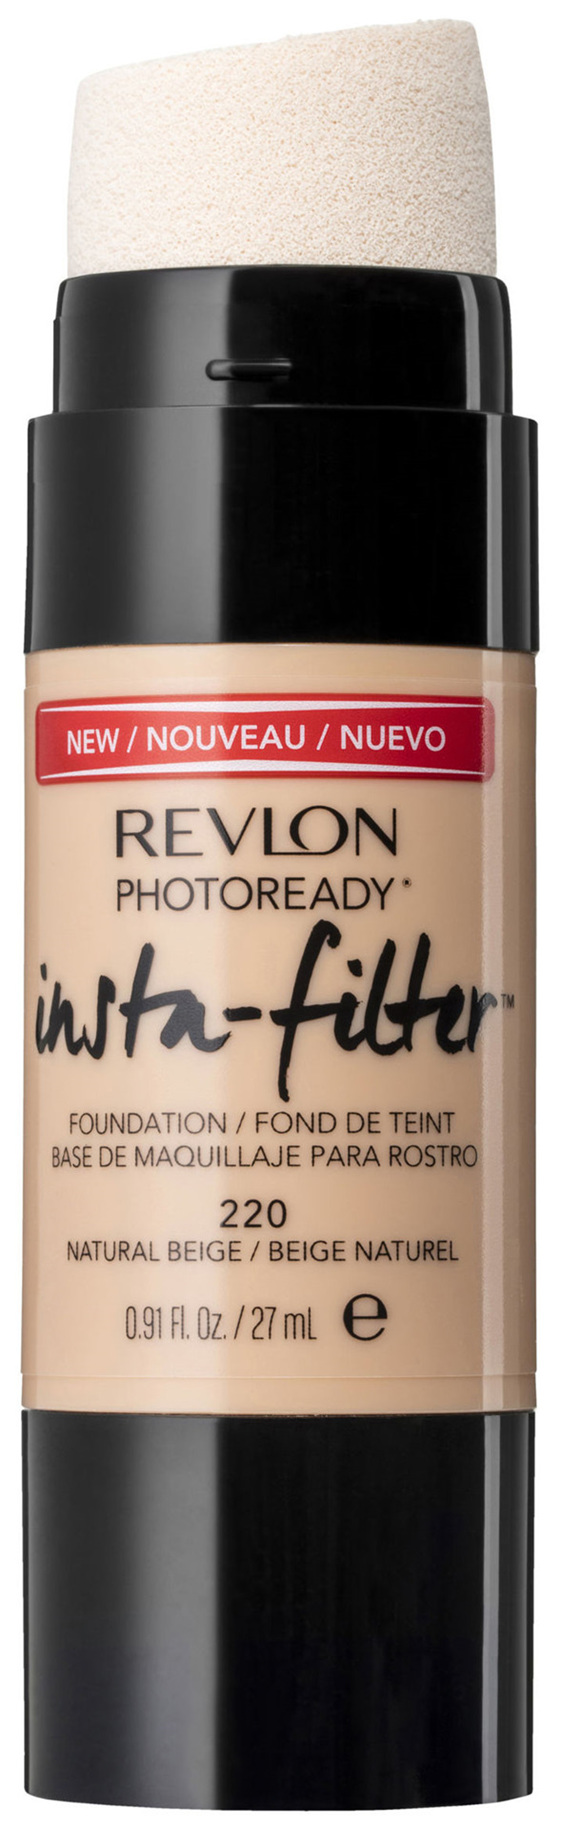 Revlon Photoready Insta-Filter™ Foundation Natural Beige